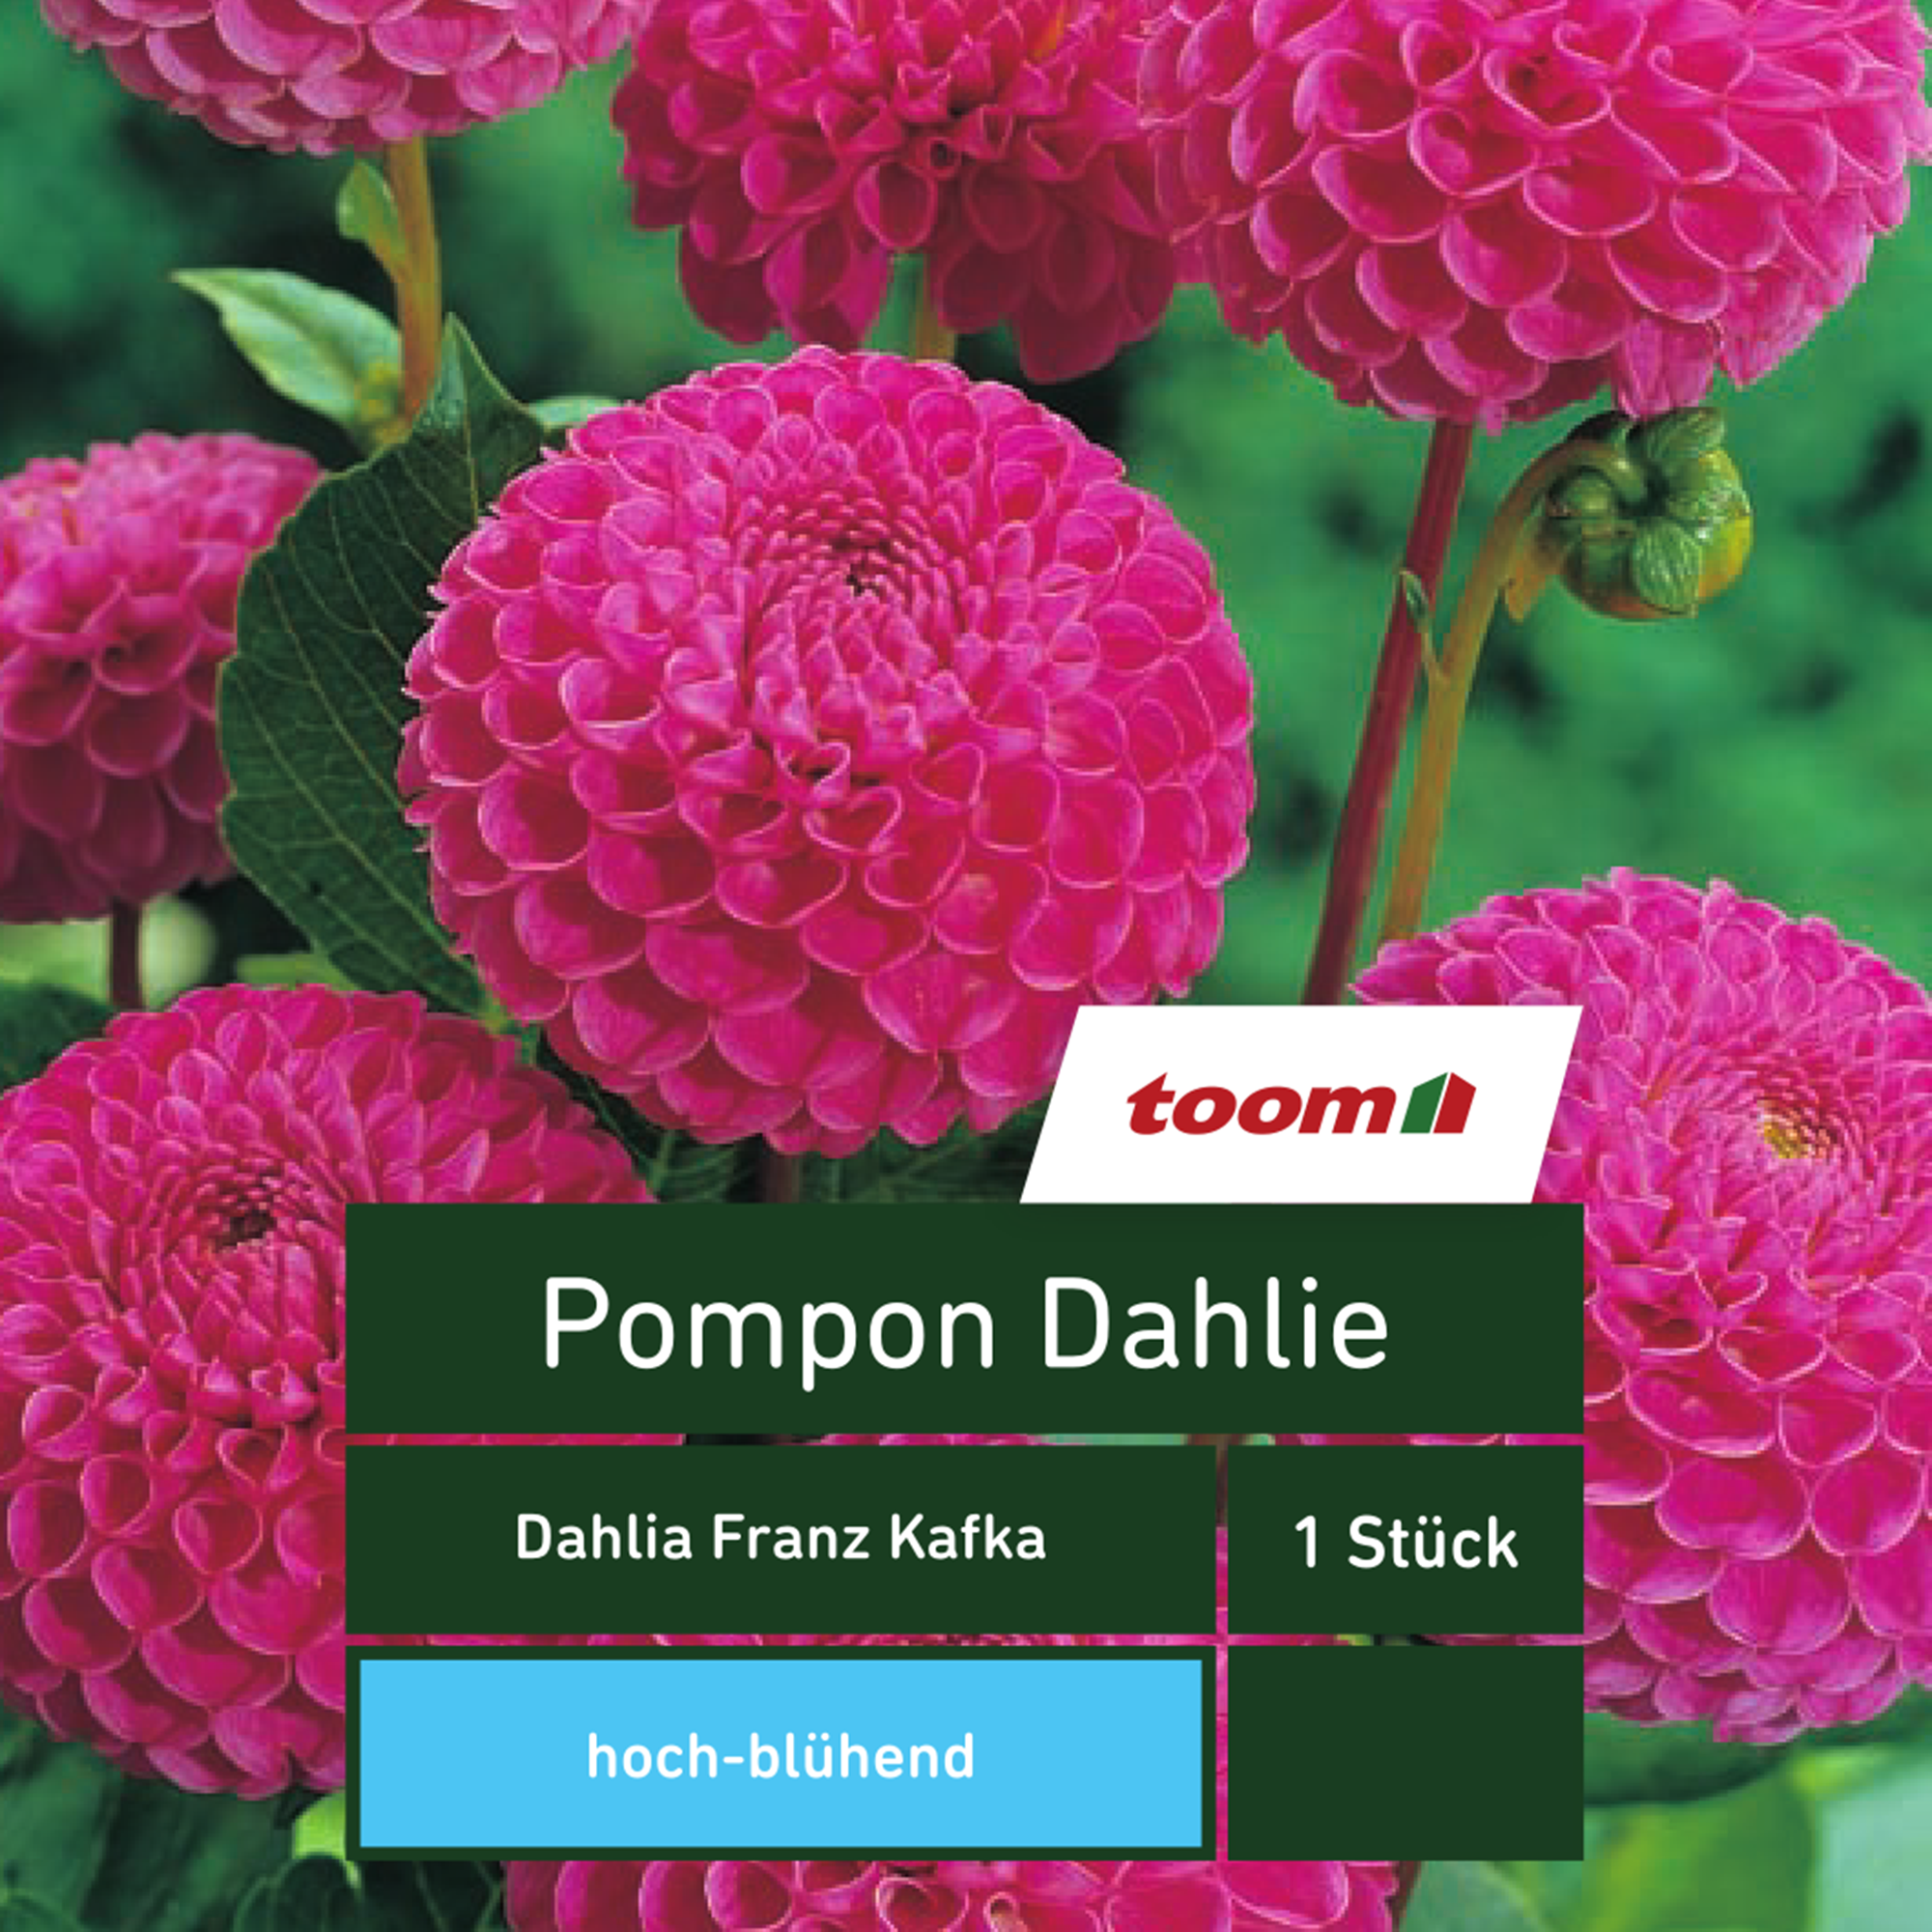 Pompon-Dahlie 'Dahlia Franz Kafka', 1 Stück, rosa + product picture